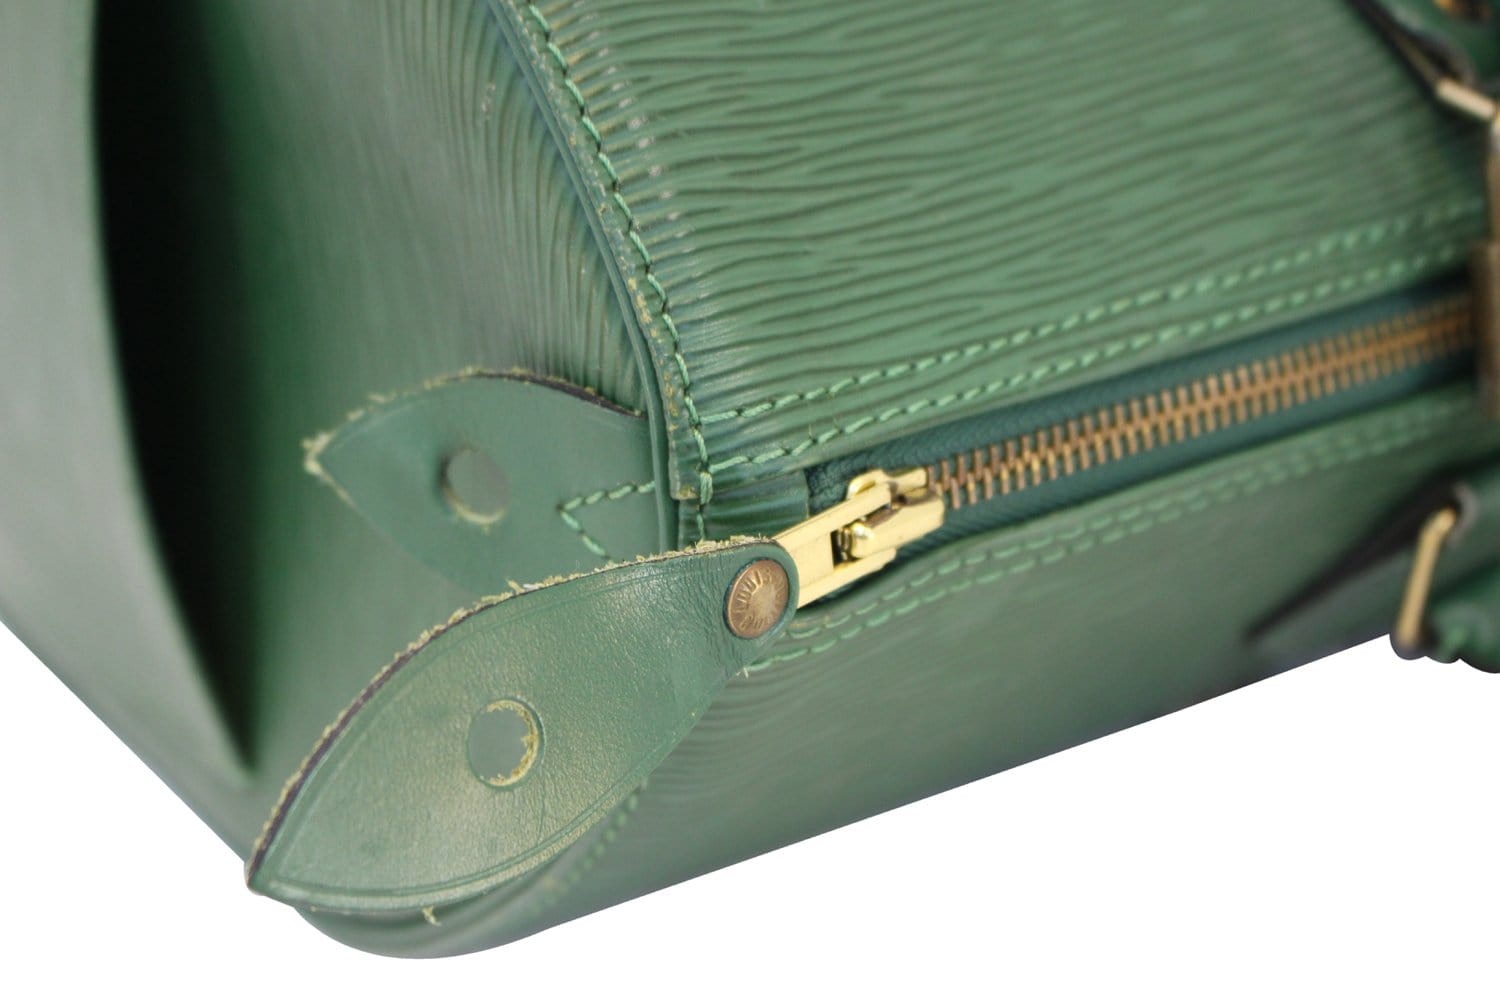 Louis Vuitton Red/Green Epi Leather Limited Editoin Speedy 25 Satchel Bag Louis  Vuitton